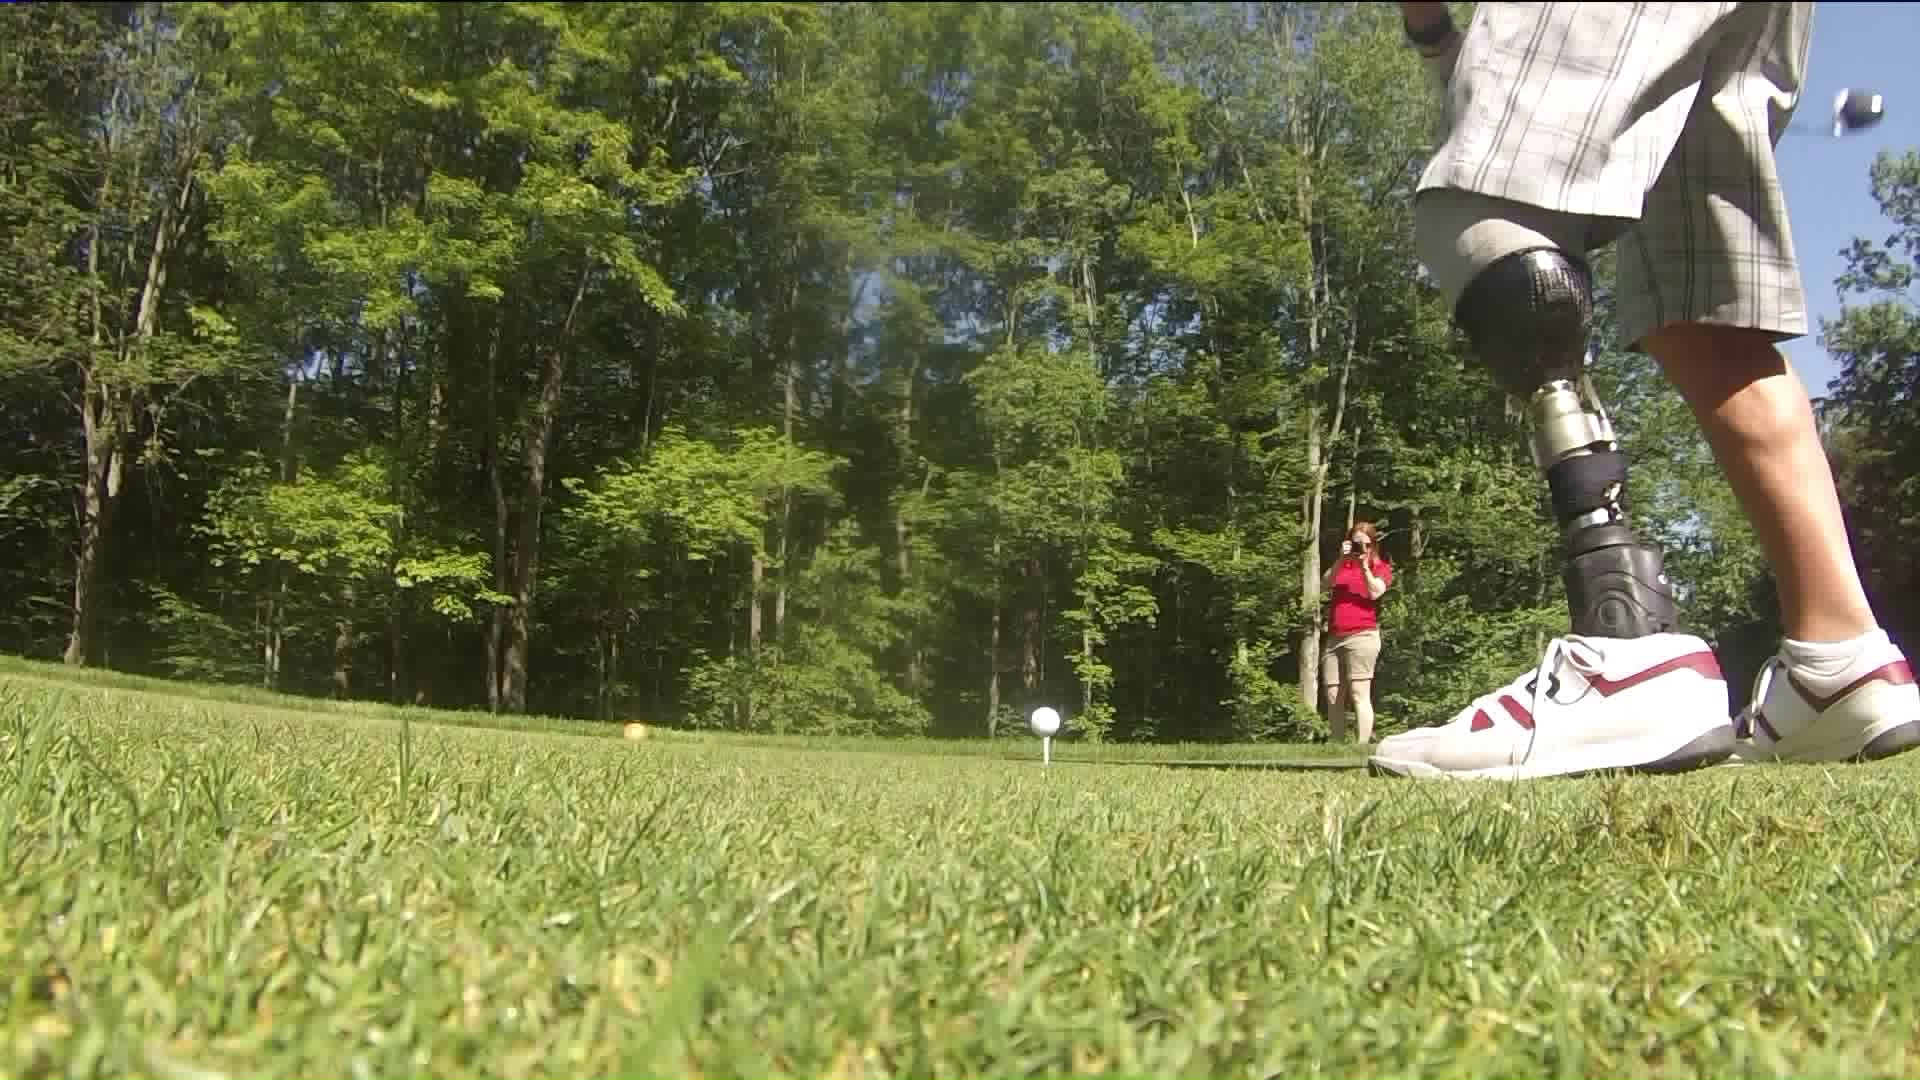 Taking a swing at adaptive golf